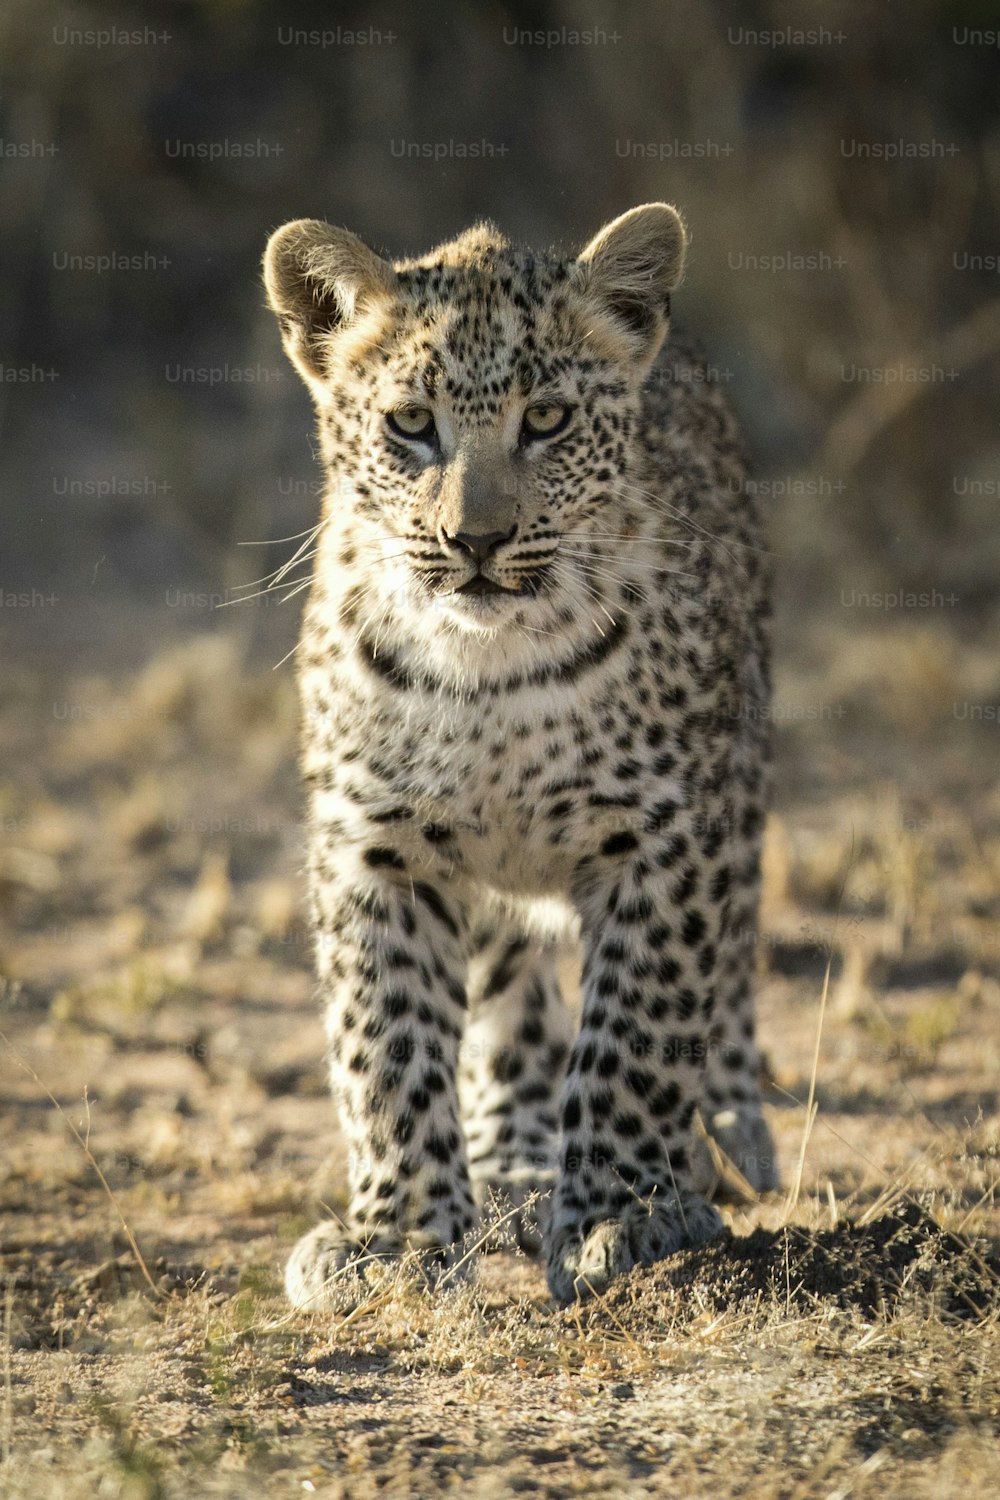 A young leopard cub looking cute